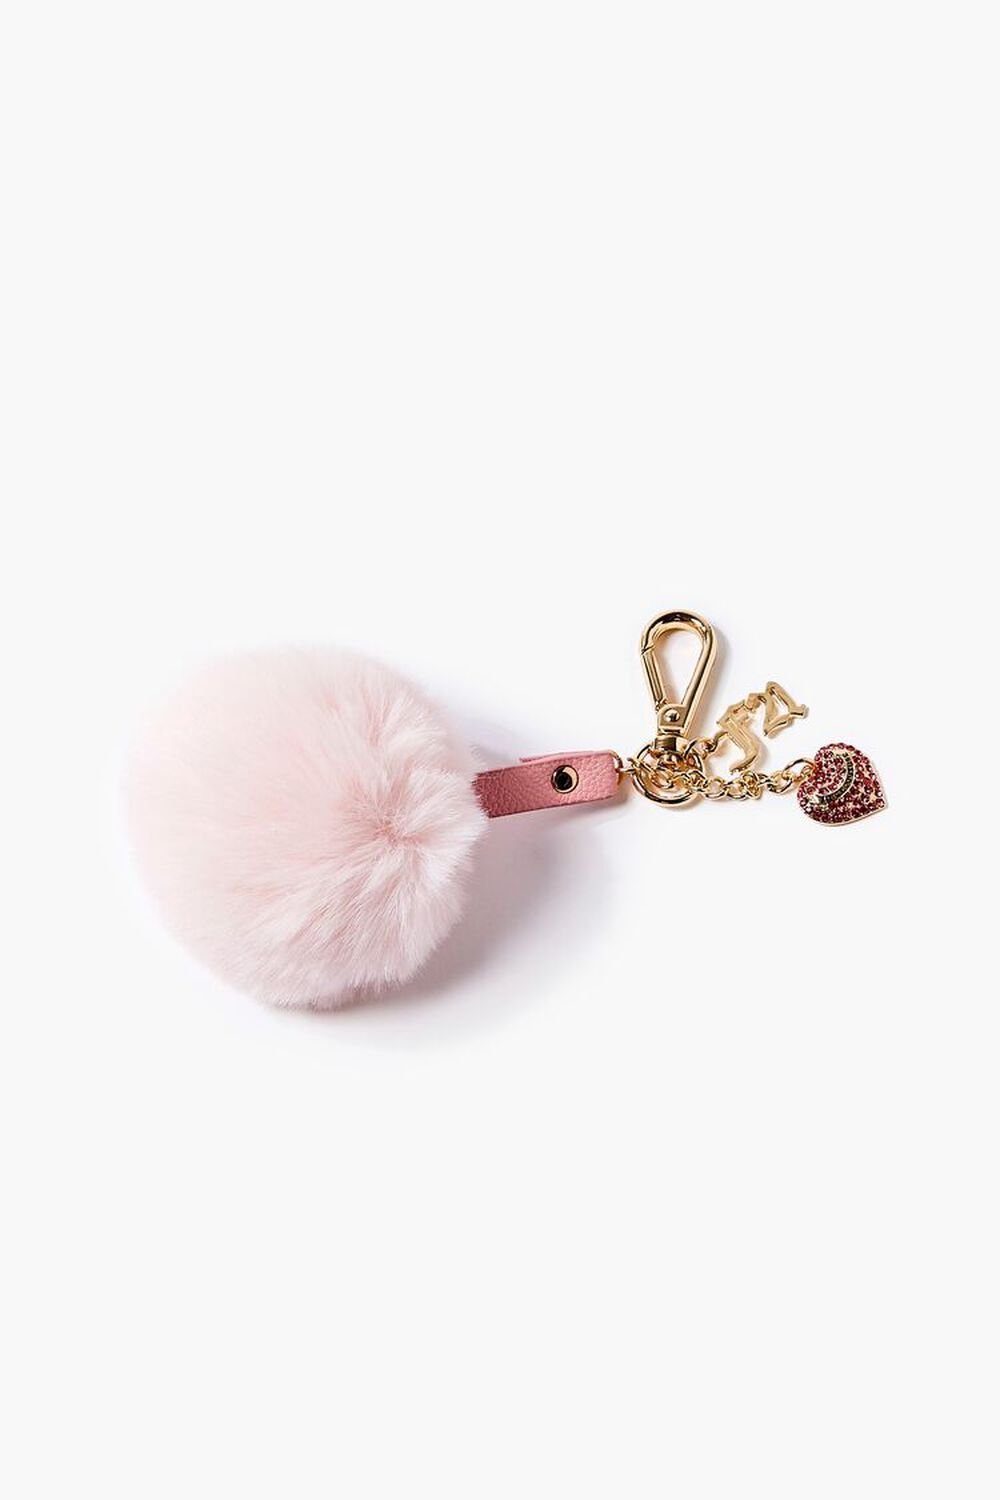 PINK Juicy Couture Pom Pom Keychain, image 1